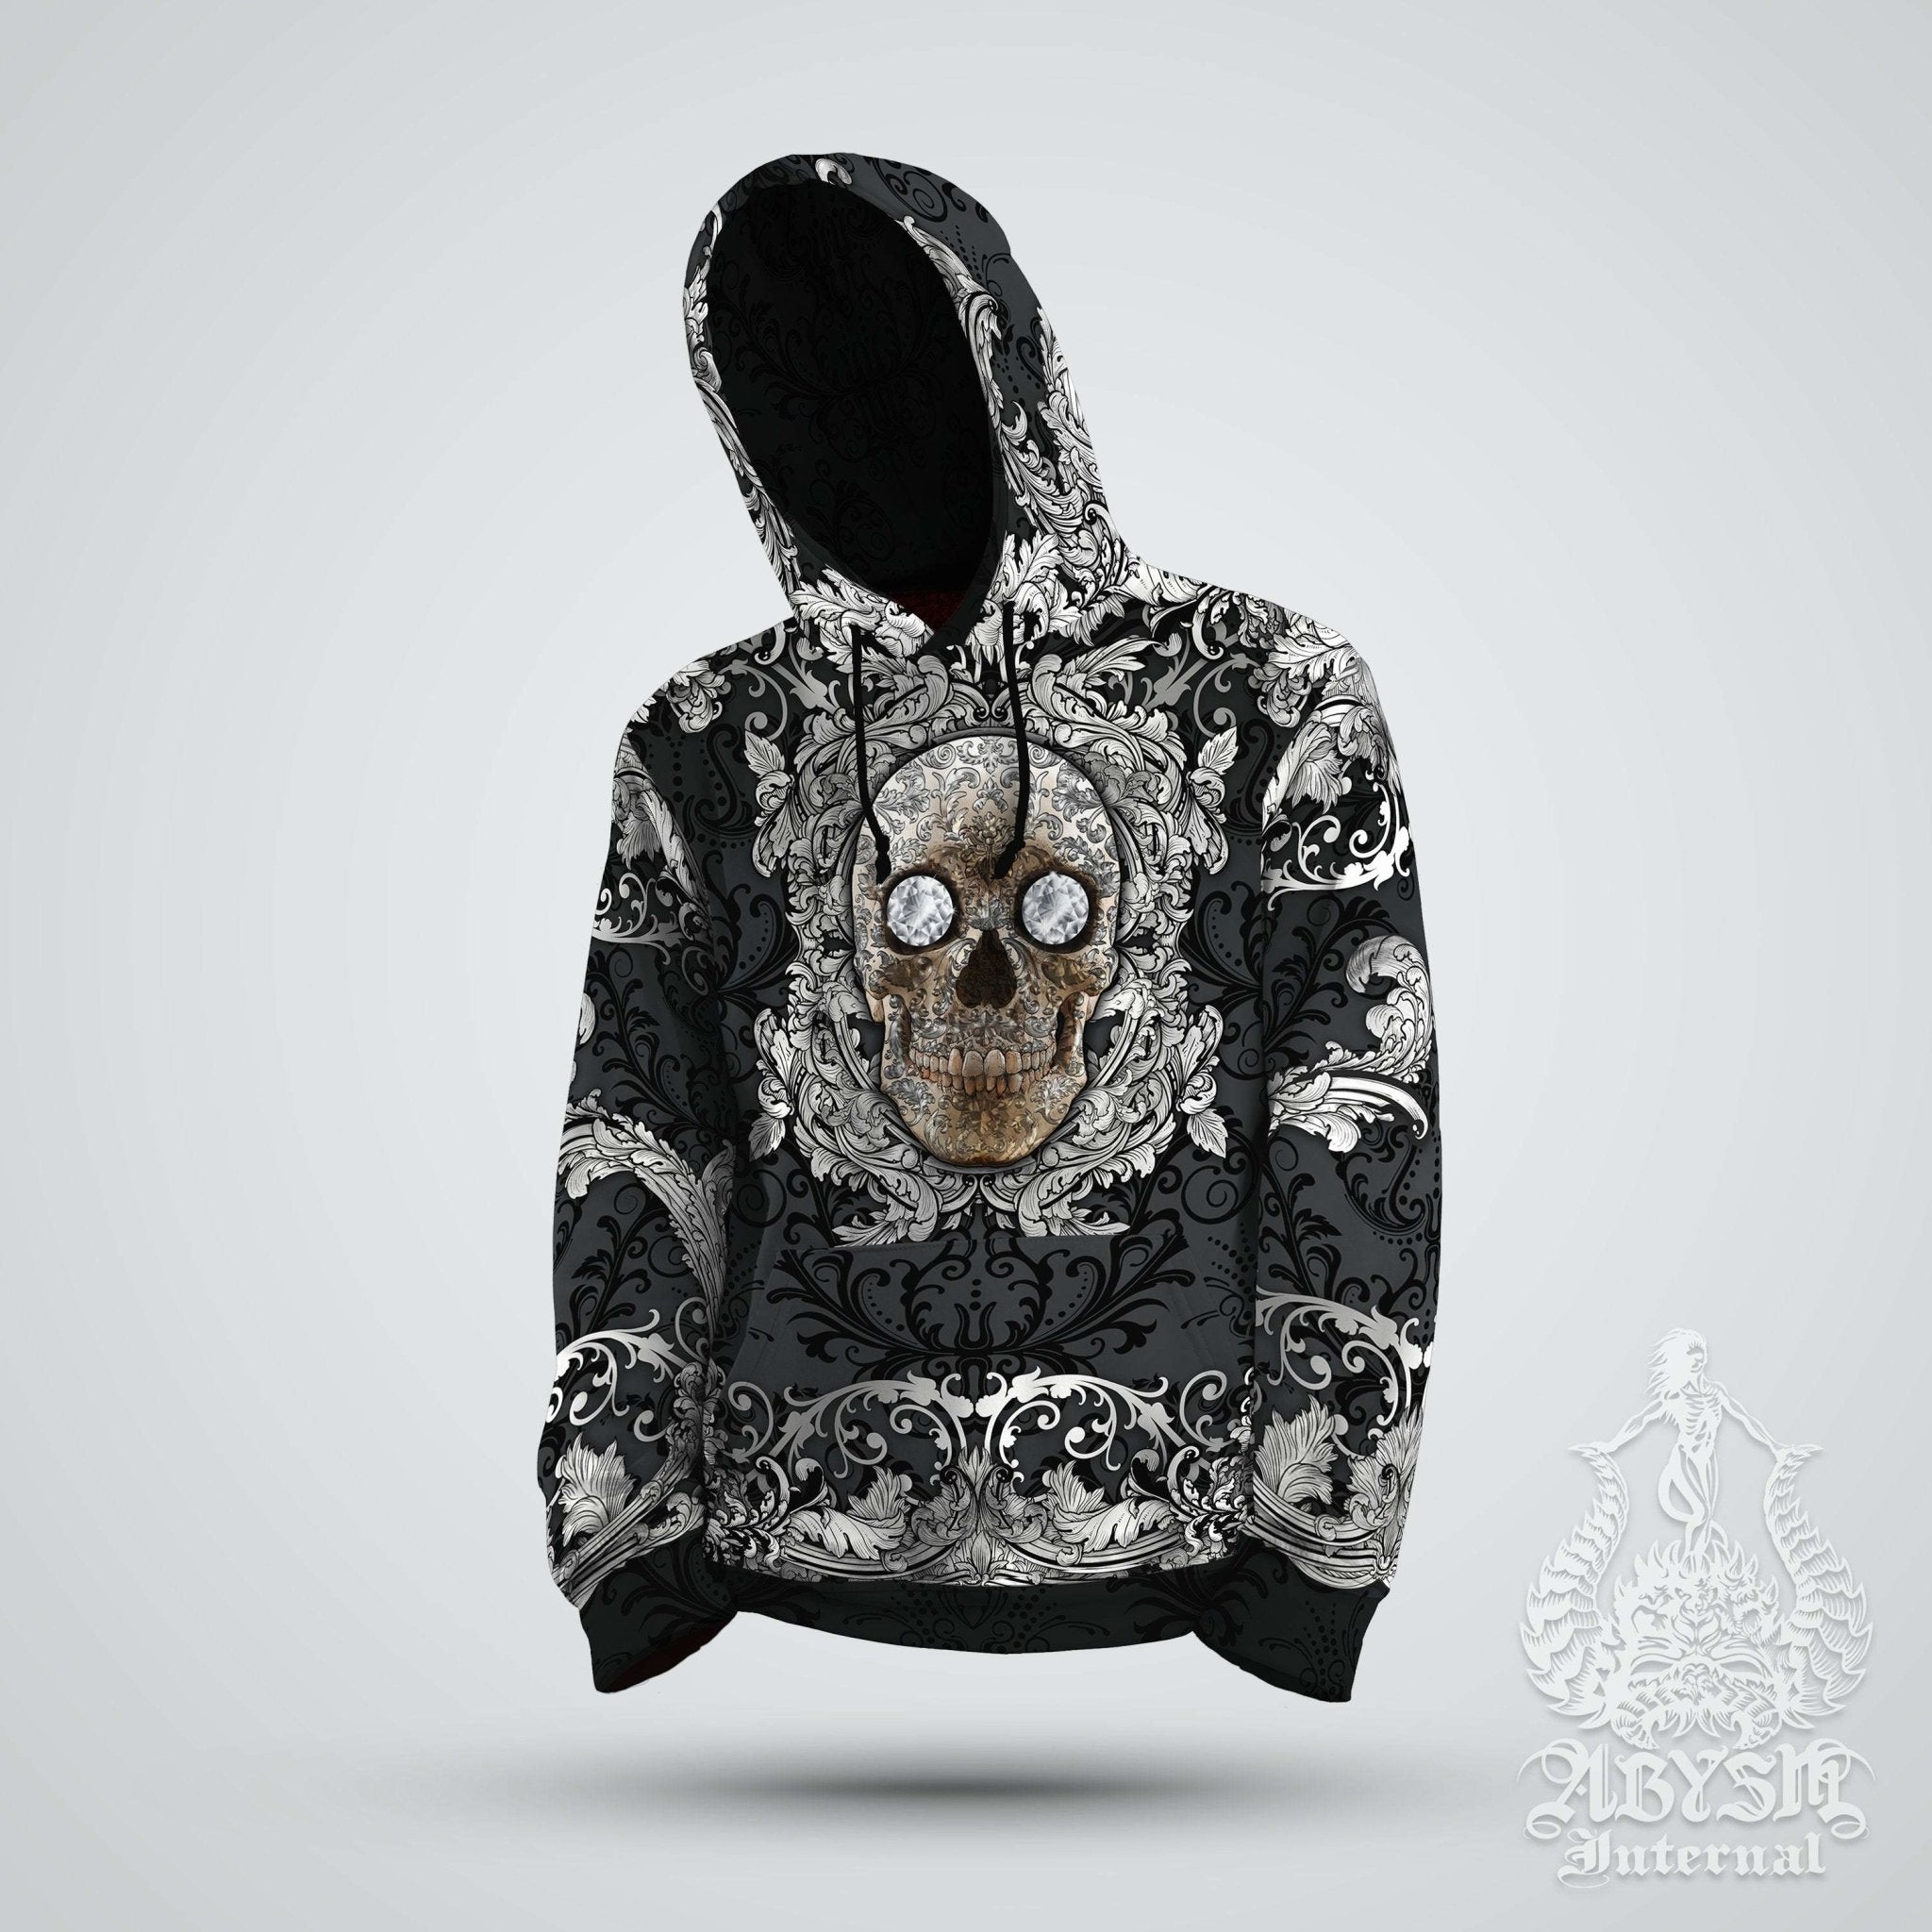 Silver Skull Hoodie, Dark Streetwear, Gothic Sweater, Skater Alternative Clothing, Unisex - Abysm Internal